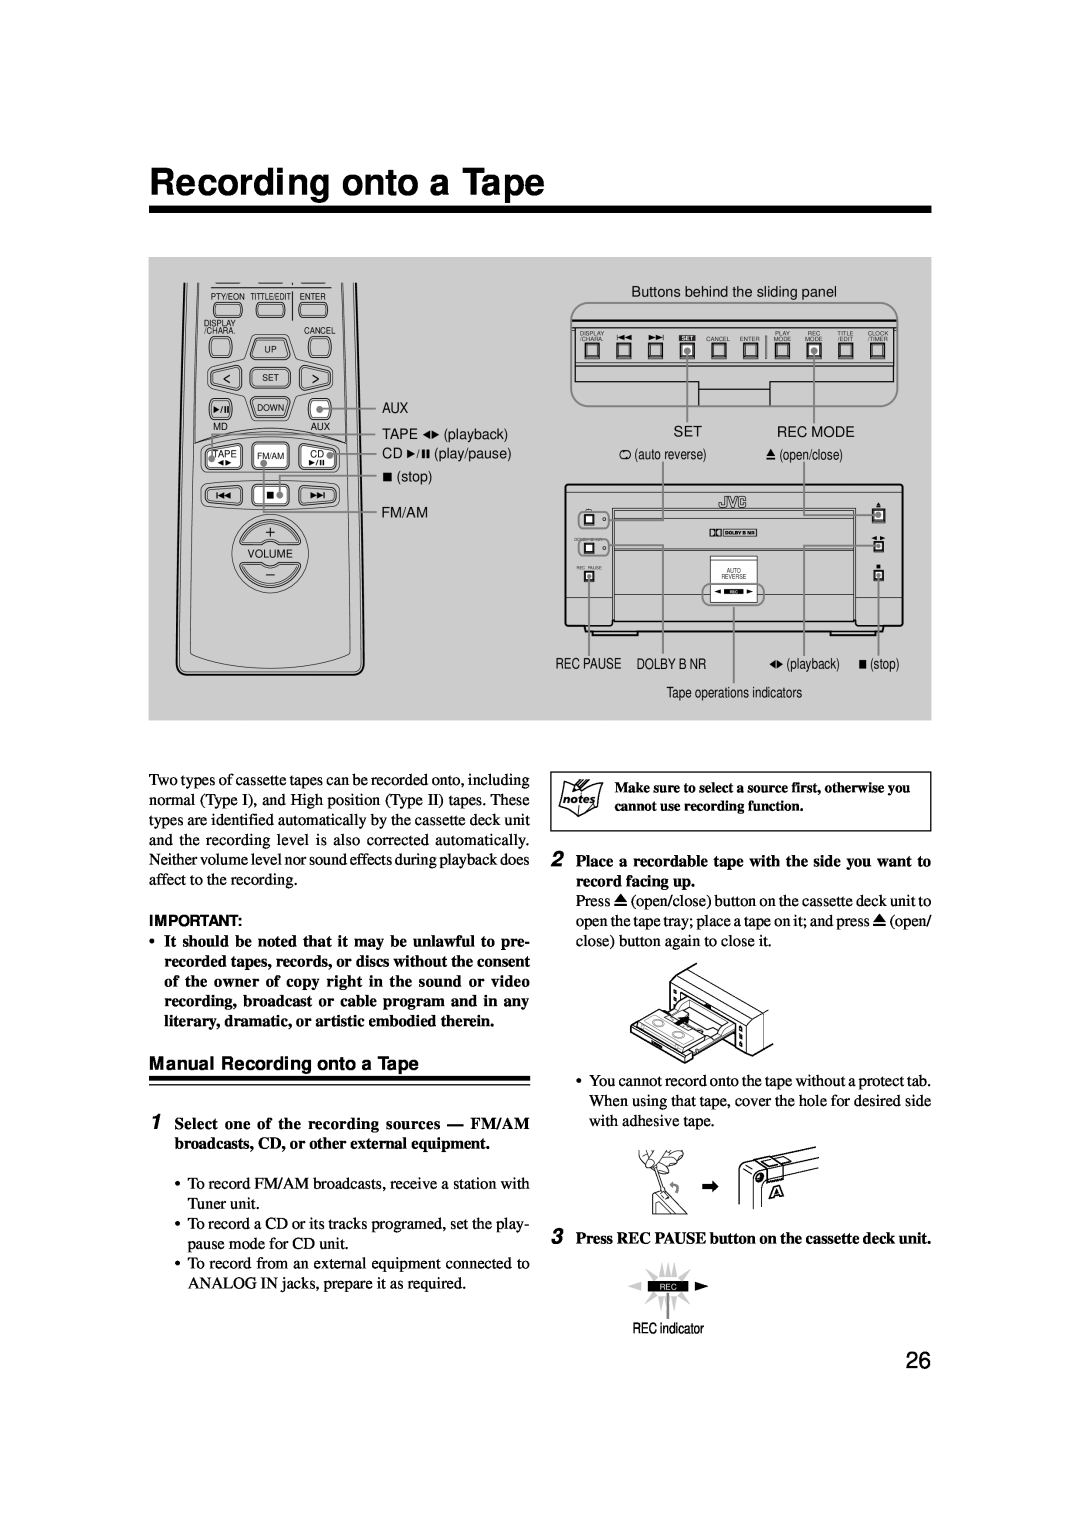 JVC TD-UXG6, XT-UXG6R, UX-G6R, SP-UXG6, AX-UXG6 manual Manual Recording onto a Tape 